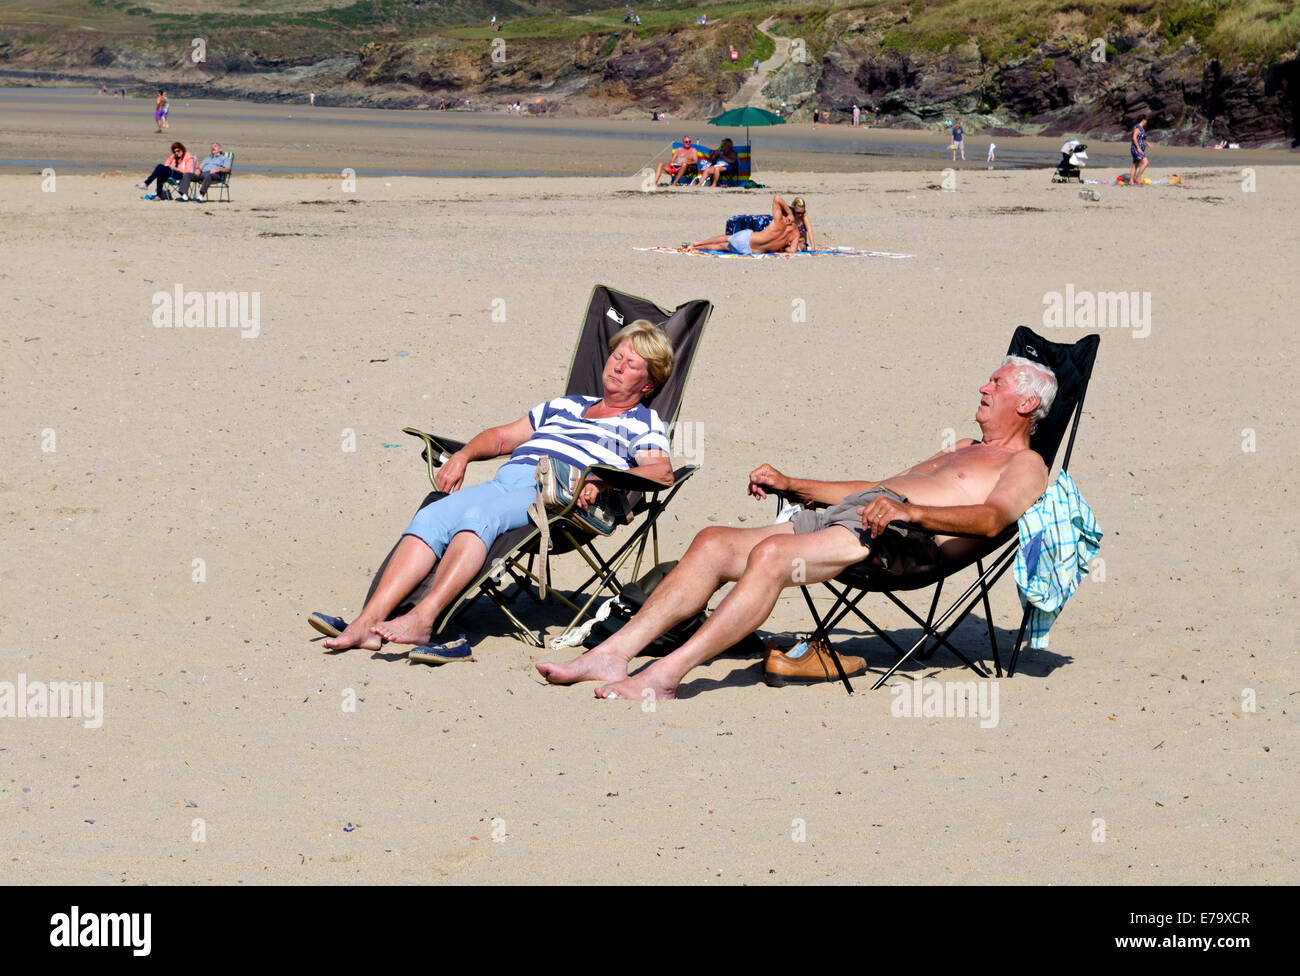 sunbathing on summerleaze beach in Bude, Cornwall, UK Stock Photo